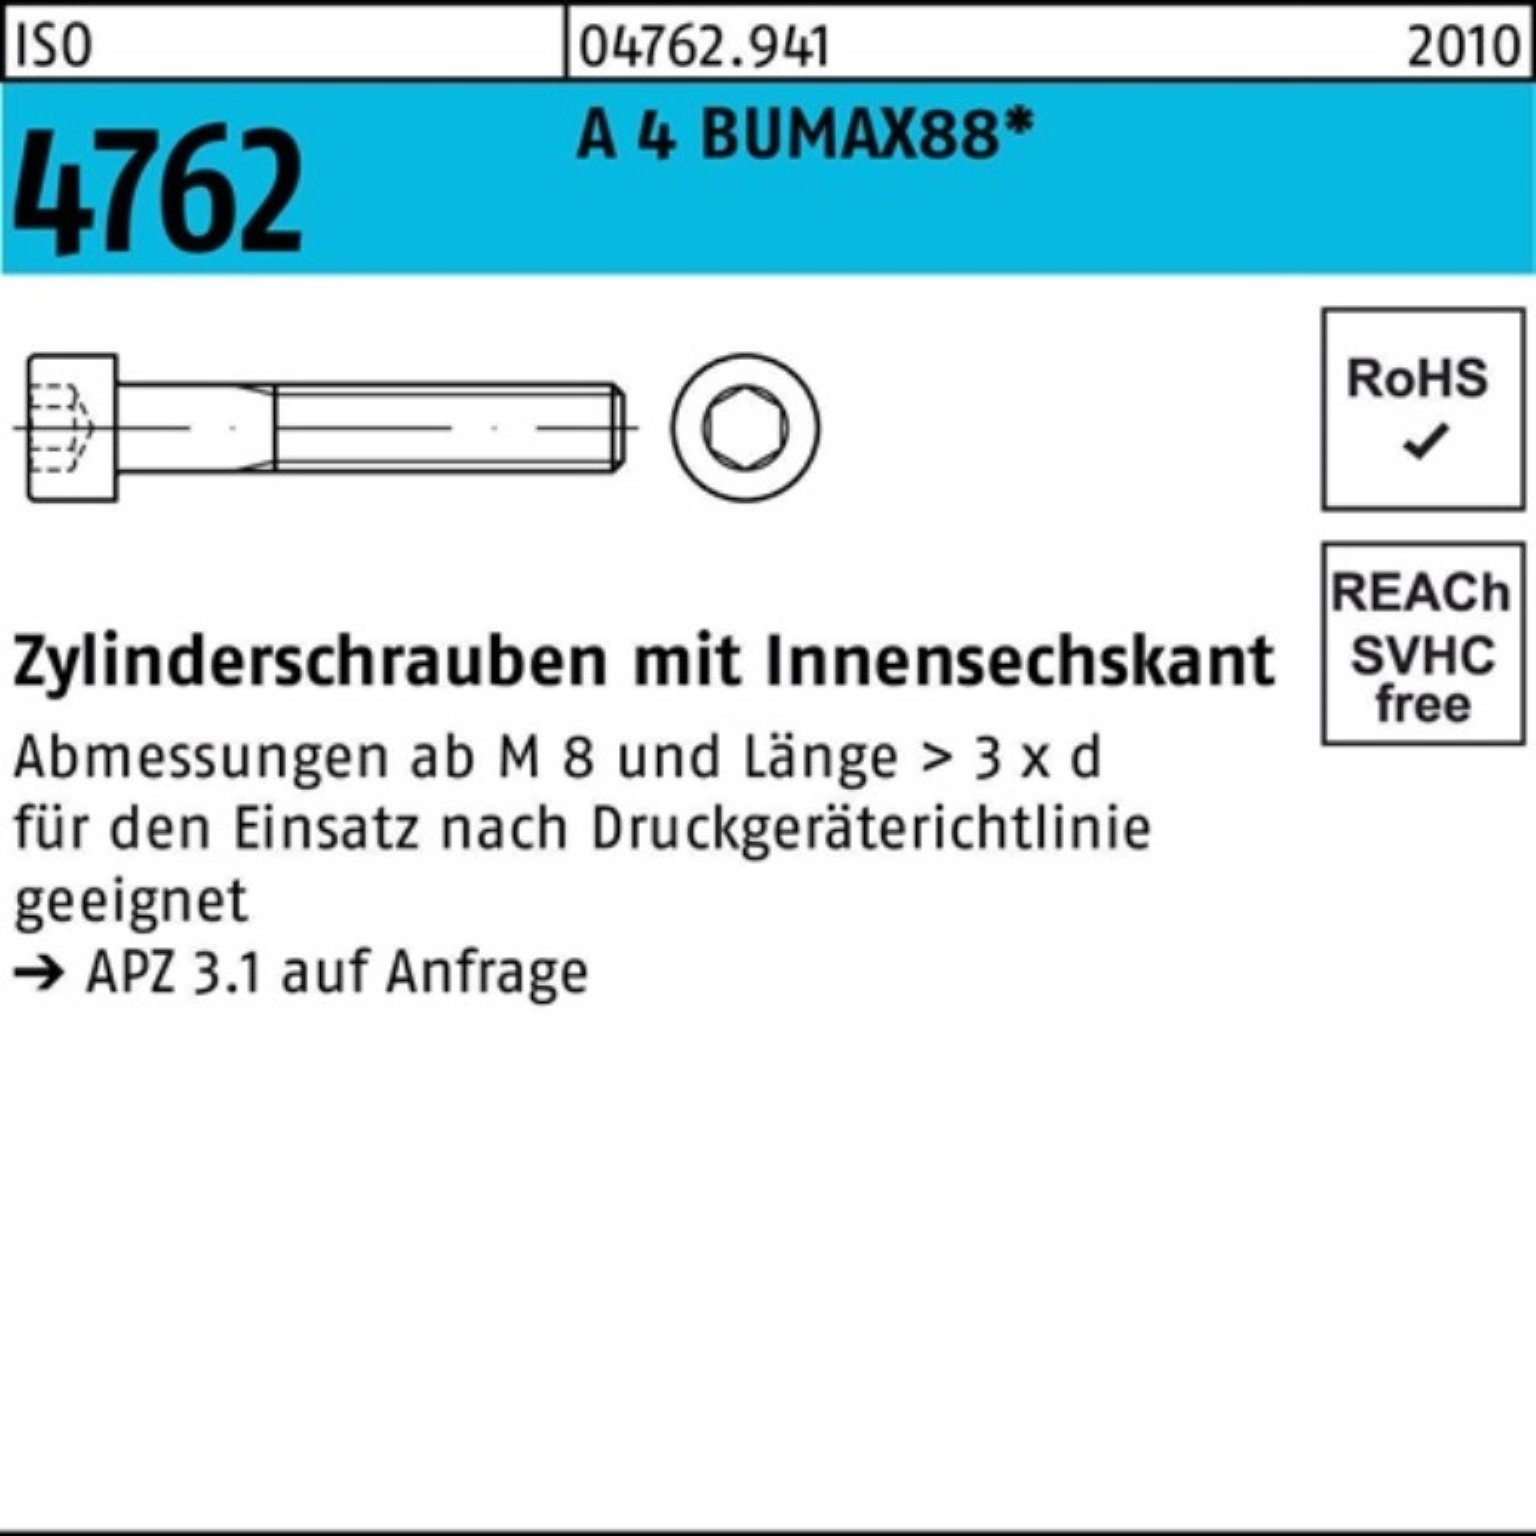 4762 Pack 40 Zylinderschraube A BUMAX88 Innen-6kt ISO 100er 100 Zylinderschraube M5x Bufab 4